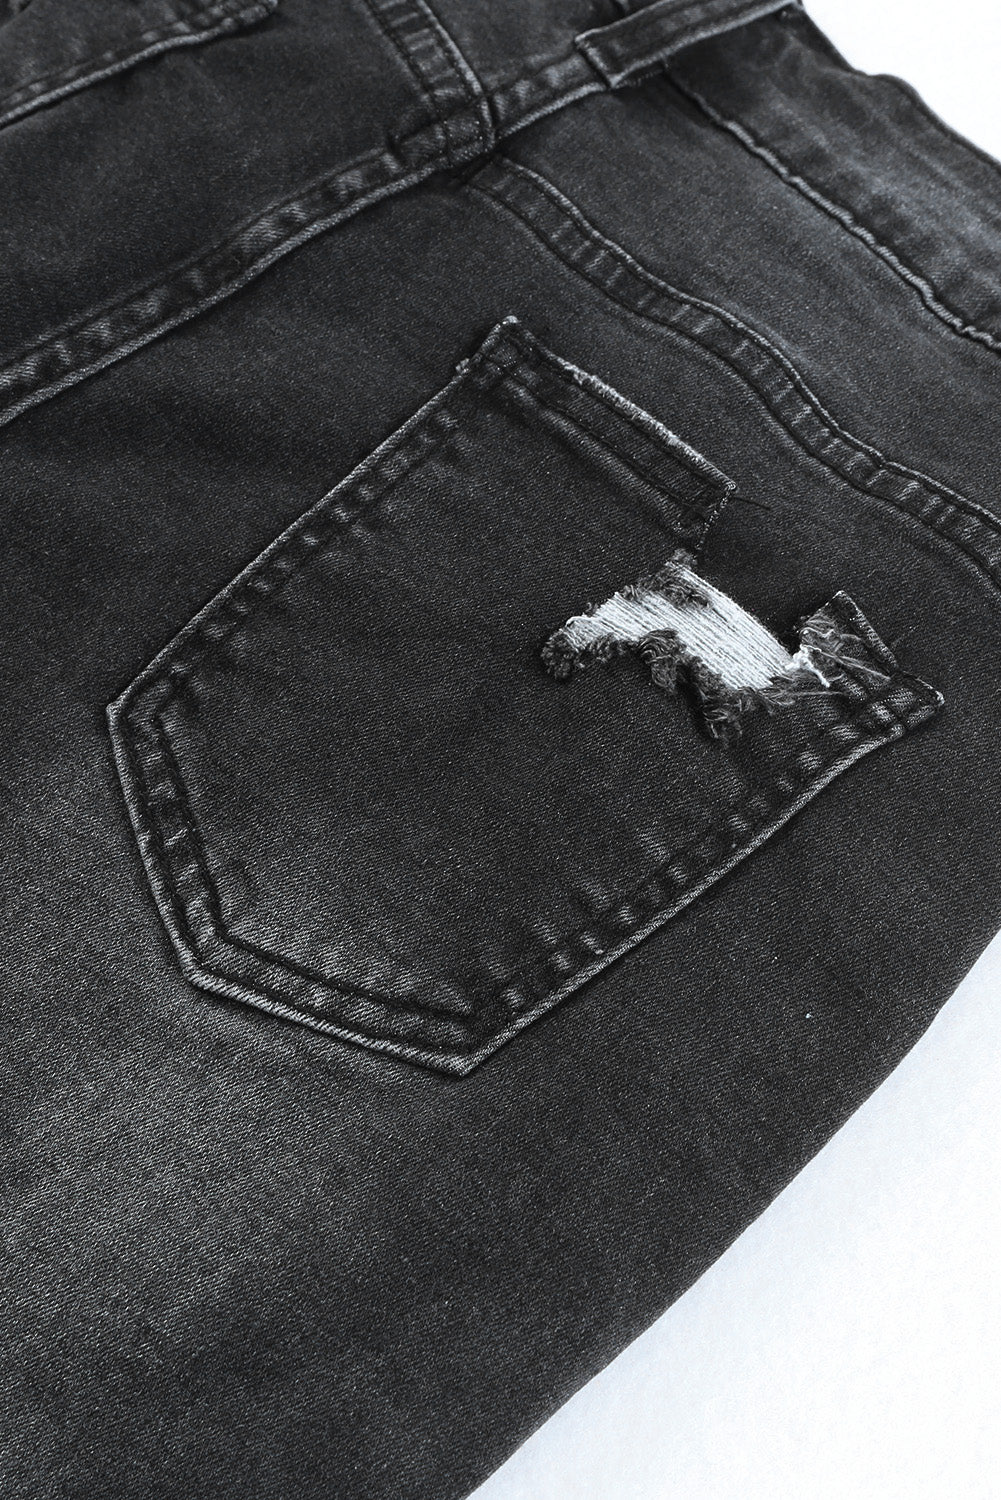 Blue Roll-up Distressed Bermuda Denim Shorts